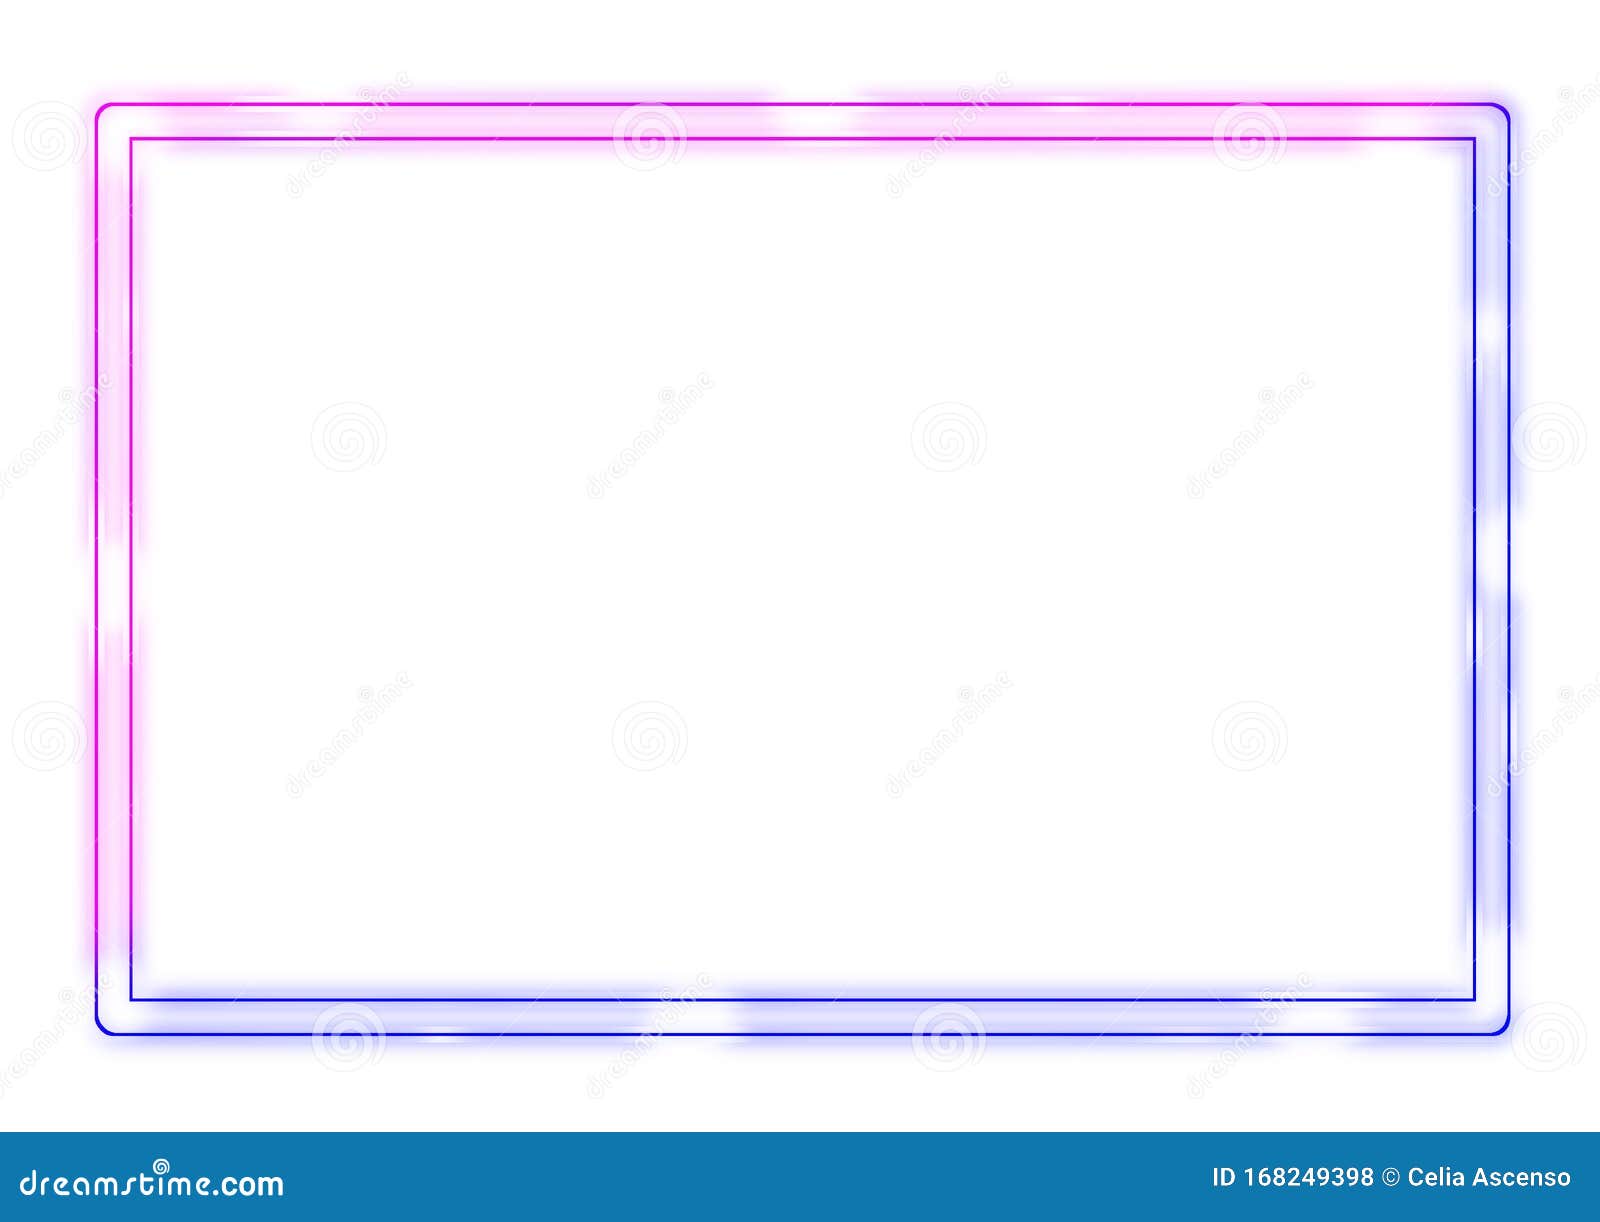 Neon Pink Blue Frame Border Stock Photo - Illustration of blue, clip:  168249398